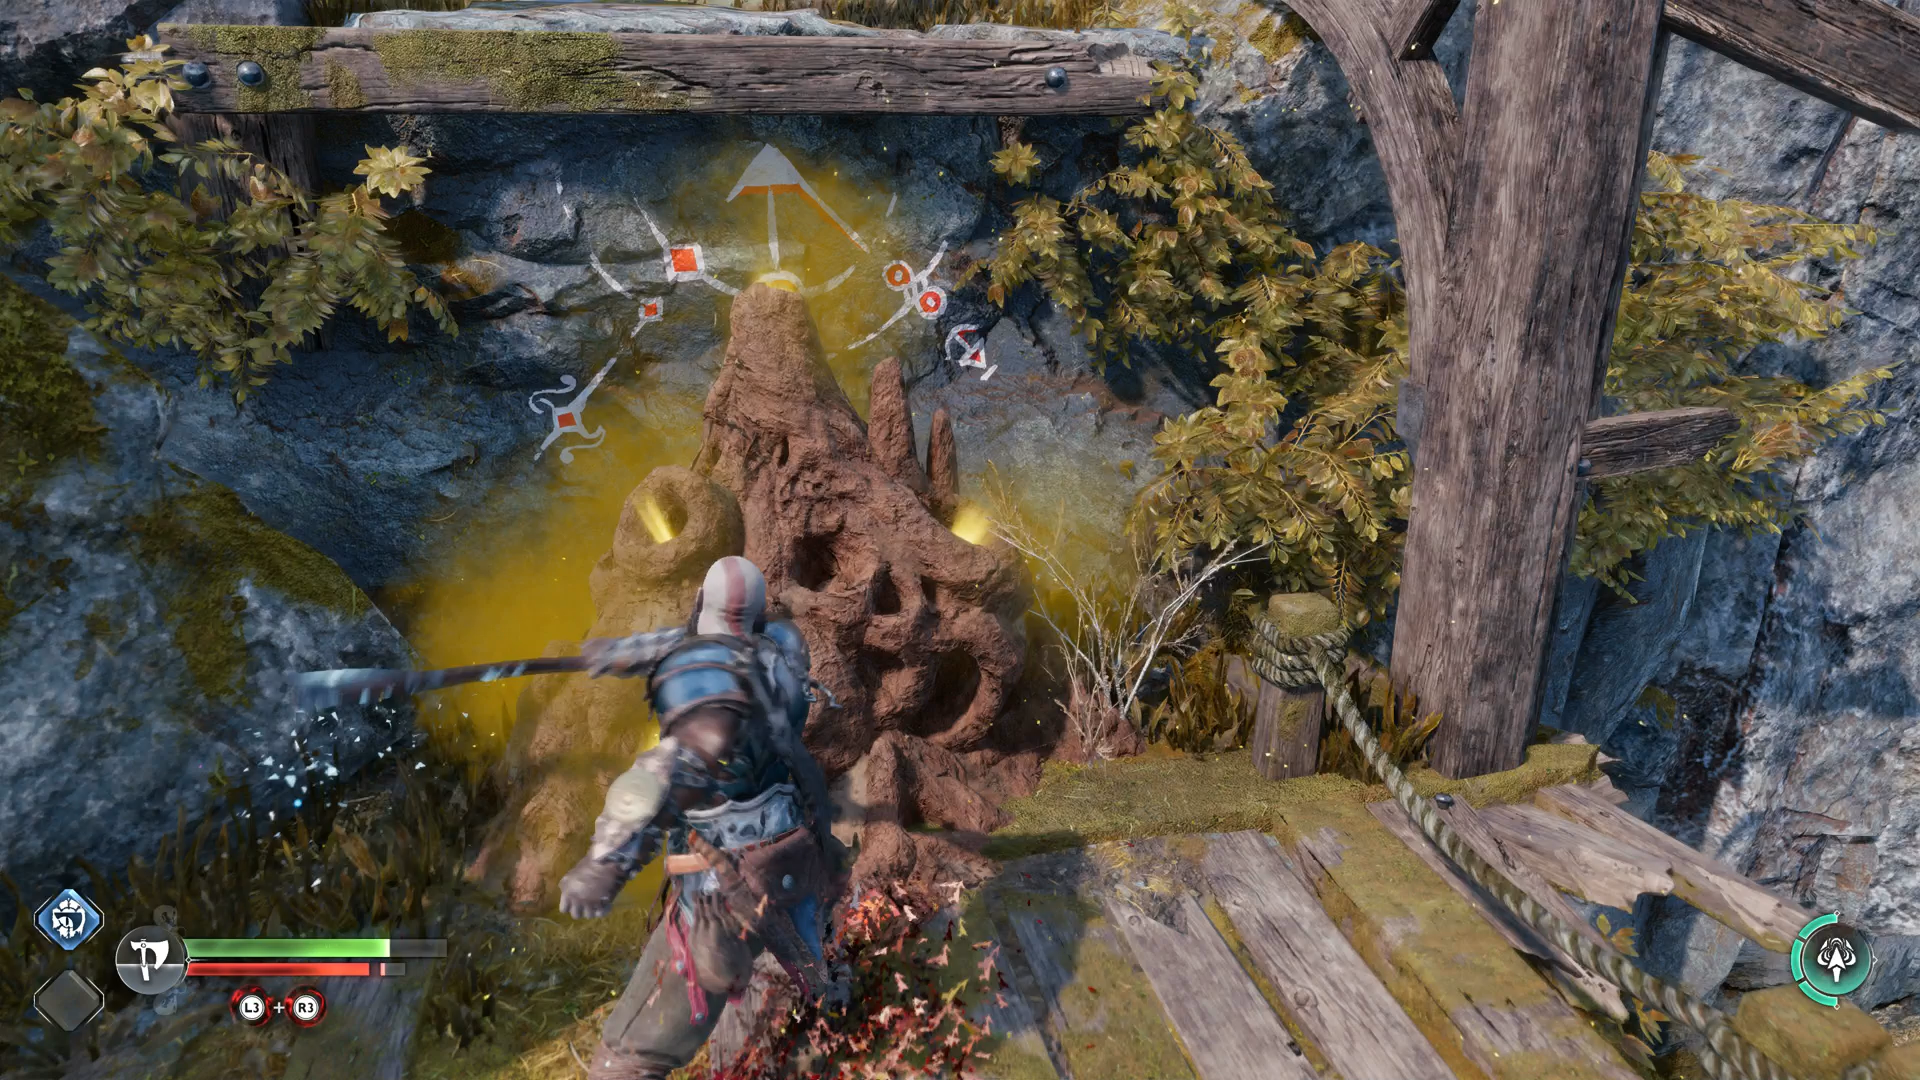 Kratos punches a Wretch nest in God of War Ragnarok